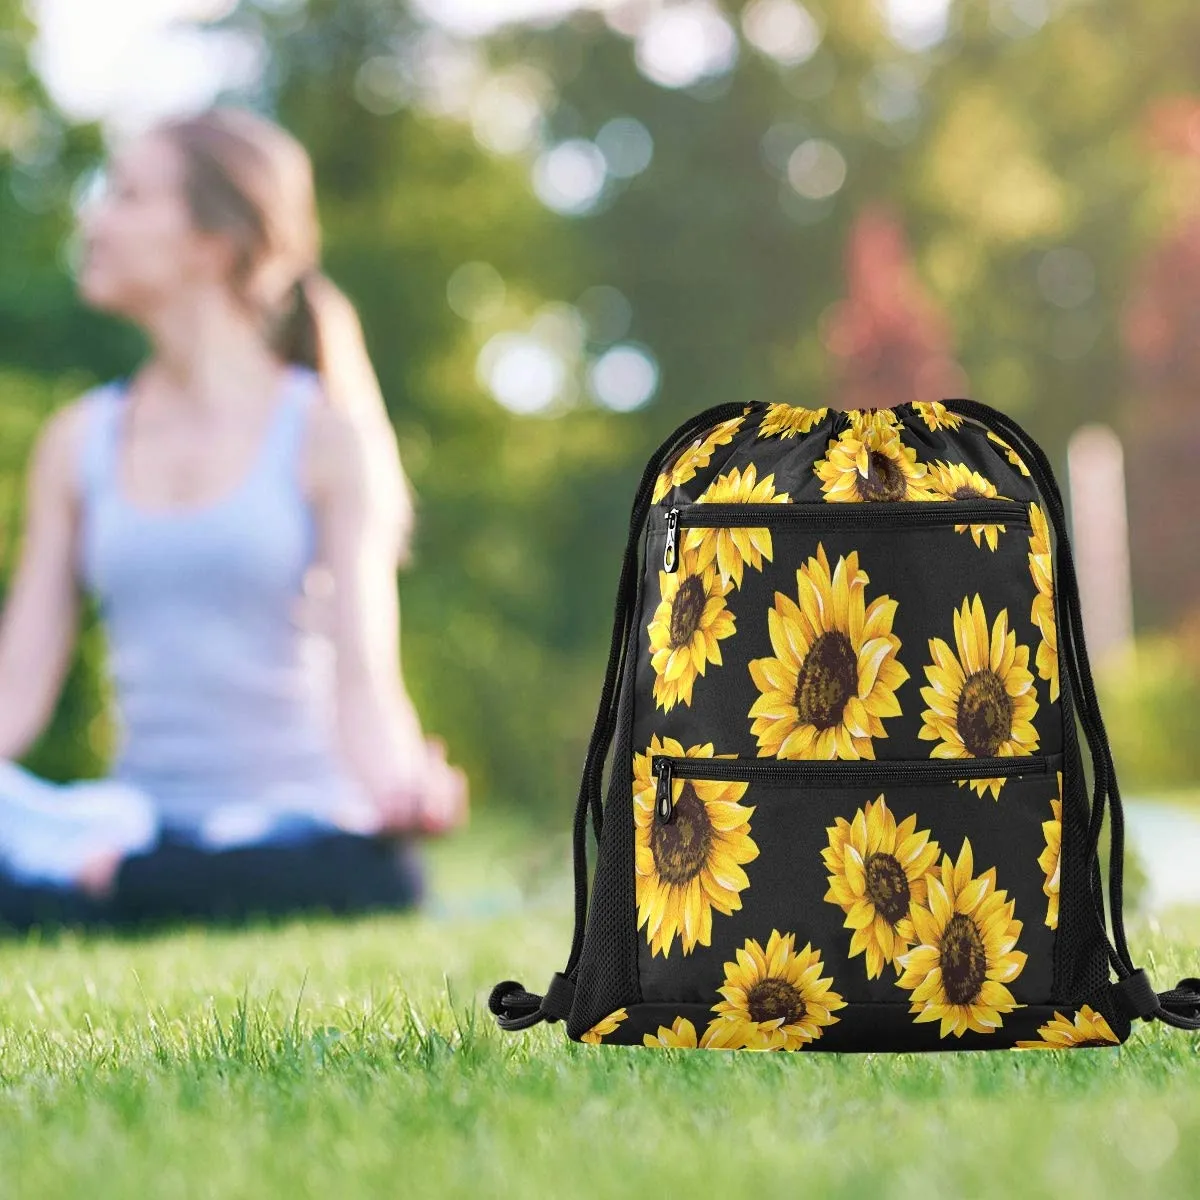 sunflower drawstring backpack for yellow flower sports gym bag sackpack for women men large size